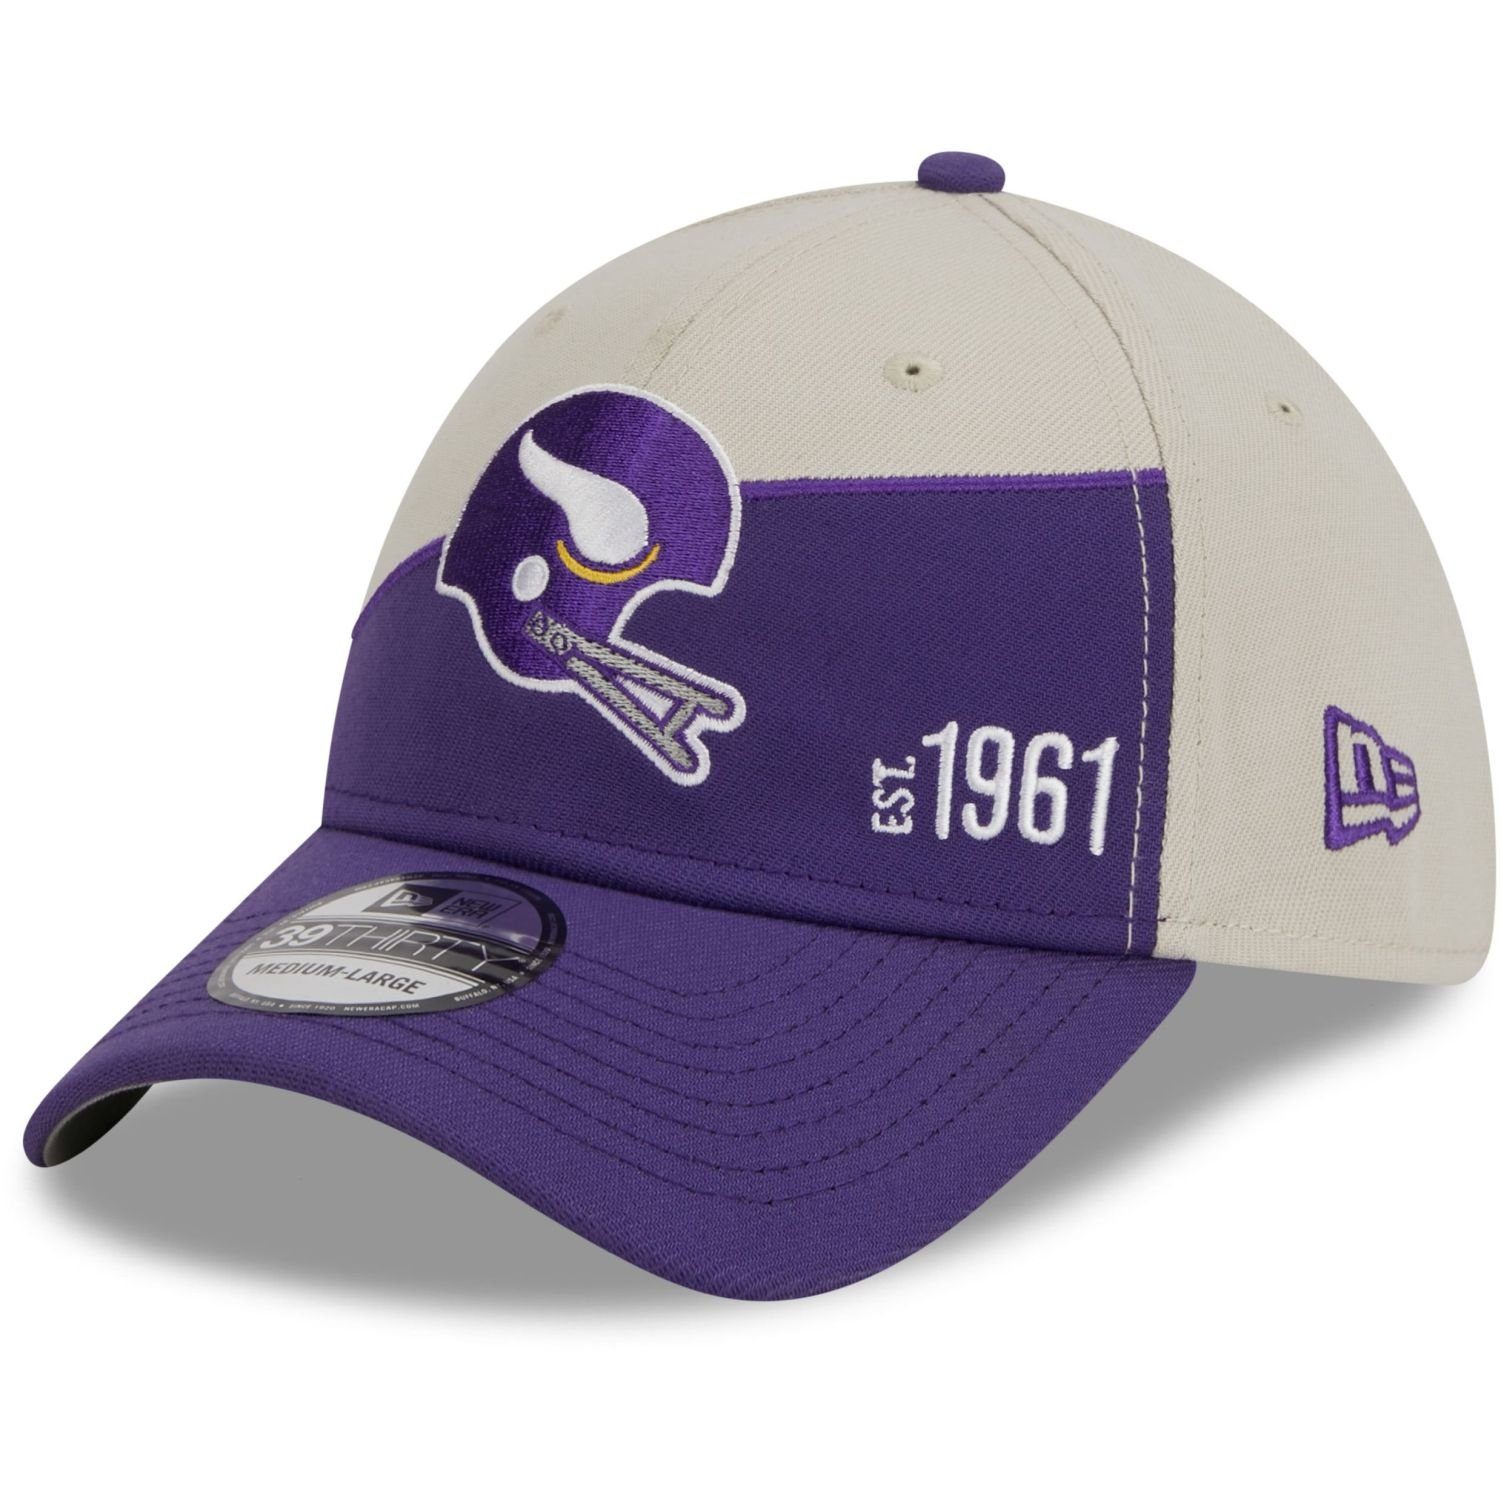 New Era Flex Cap 39Thirty SIDELINE HISTORIC Minnesota Vikings